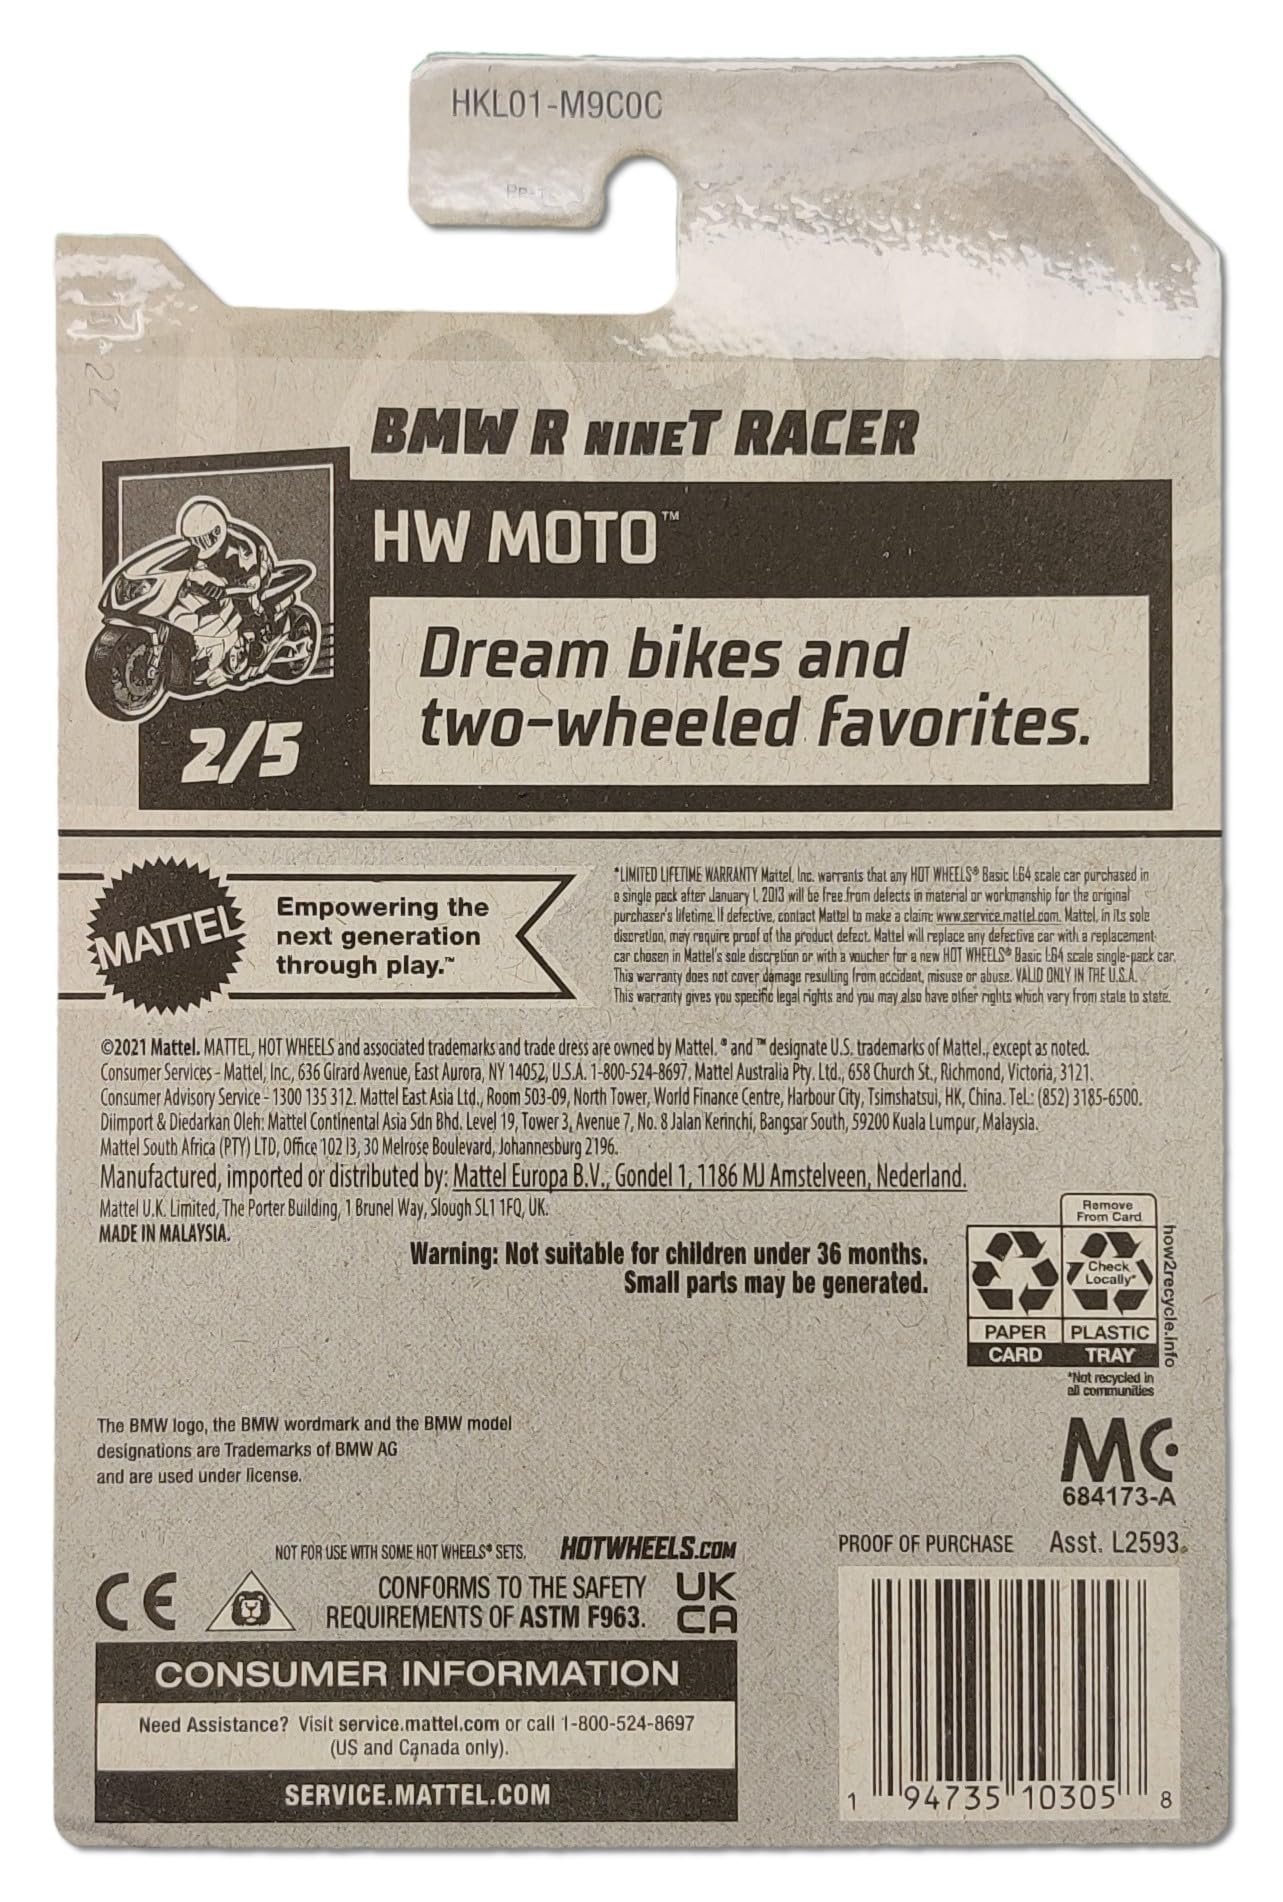 Hot Wheels BMW R NineT Racer, HW Moto 2/5